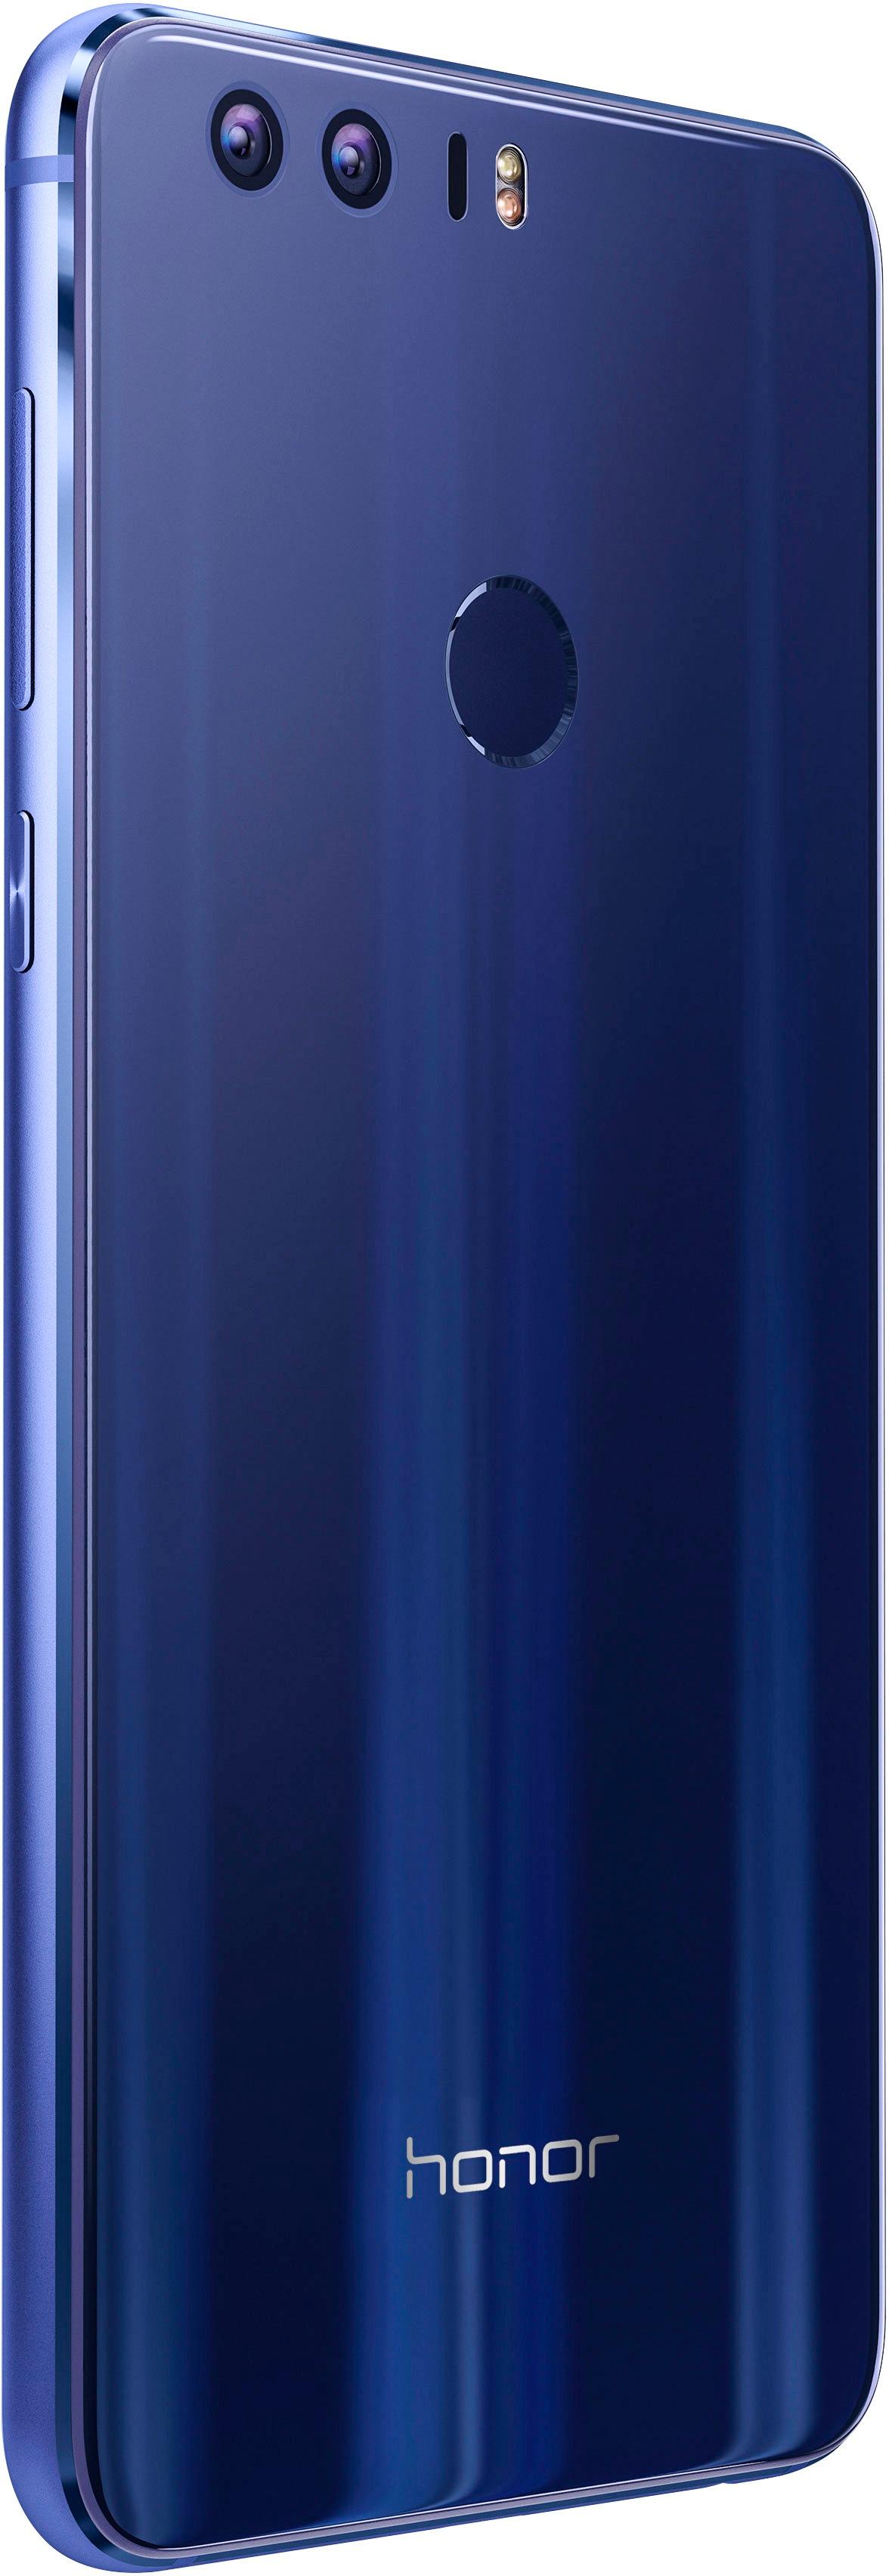 Best Buy: Huawei Honor 8 4G 64GB Memory Cell Phone (Unlocked) Sapphire blue FRD-L14